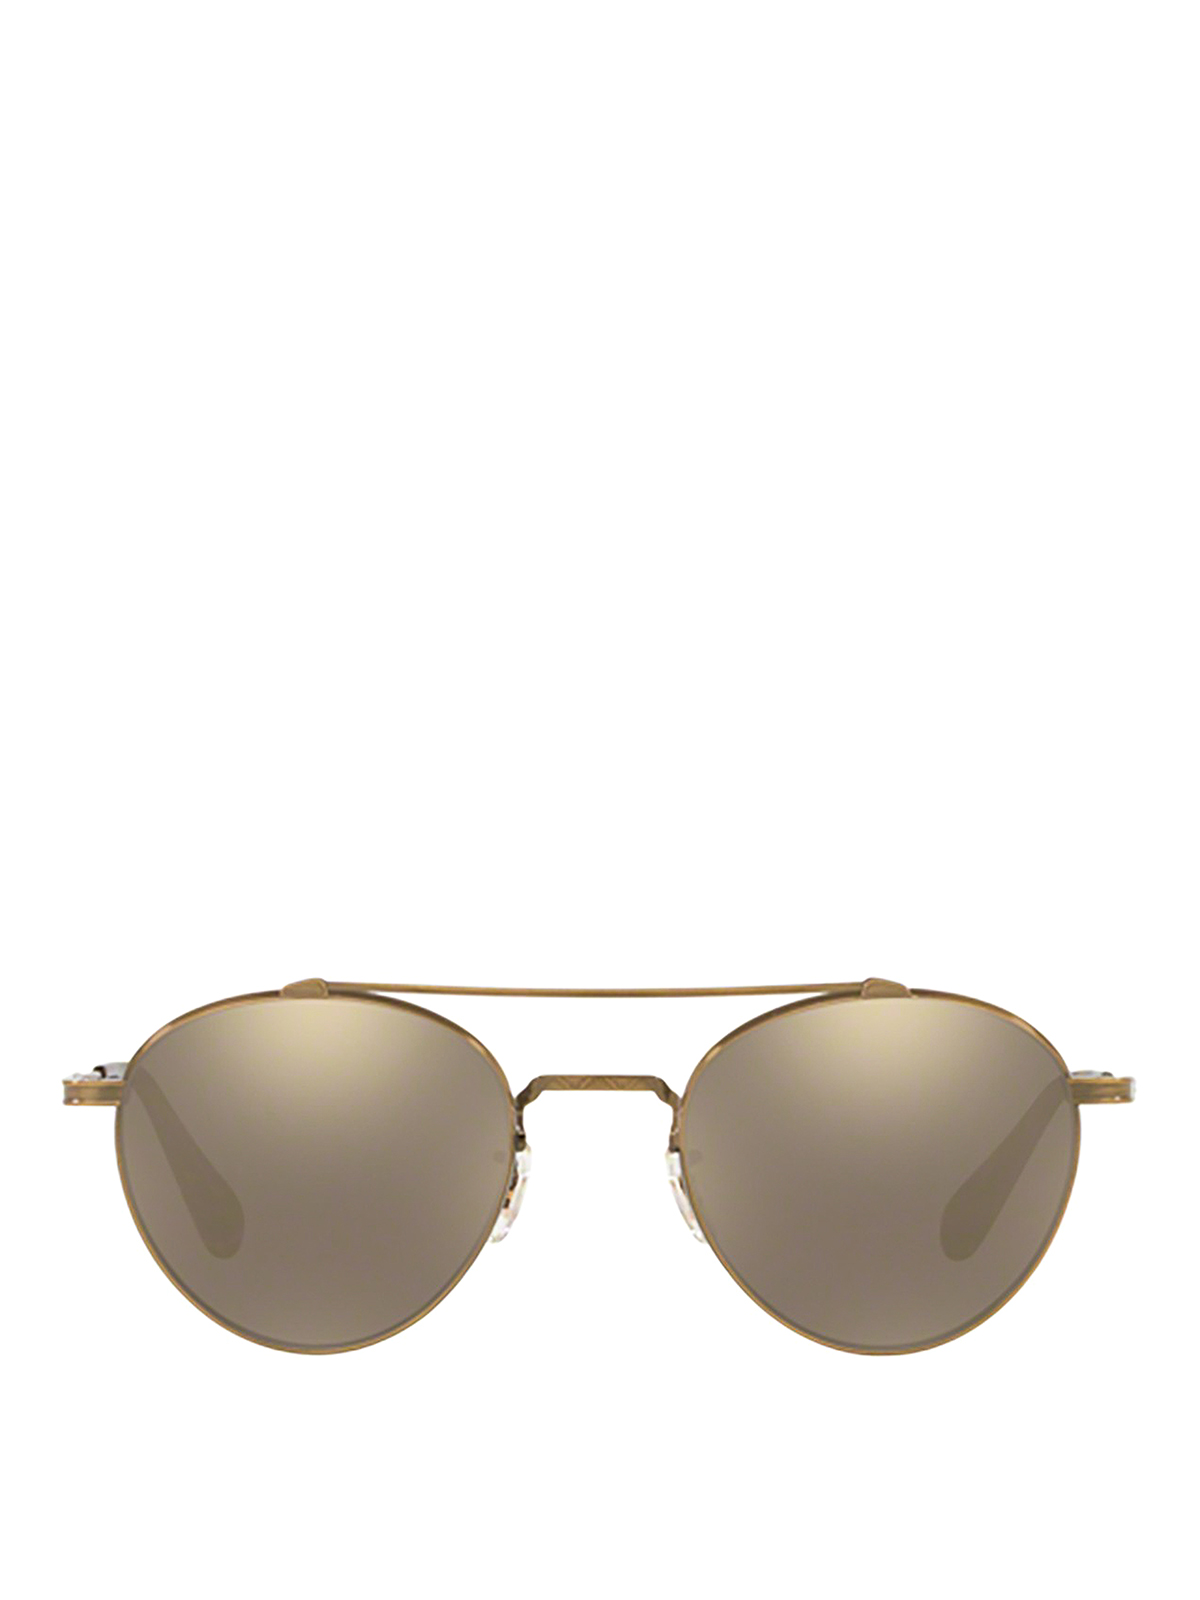 Sunglasses Oliver Peoples - Watts Sun double bridge sunglasses -  OV1223ST51246G